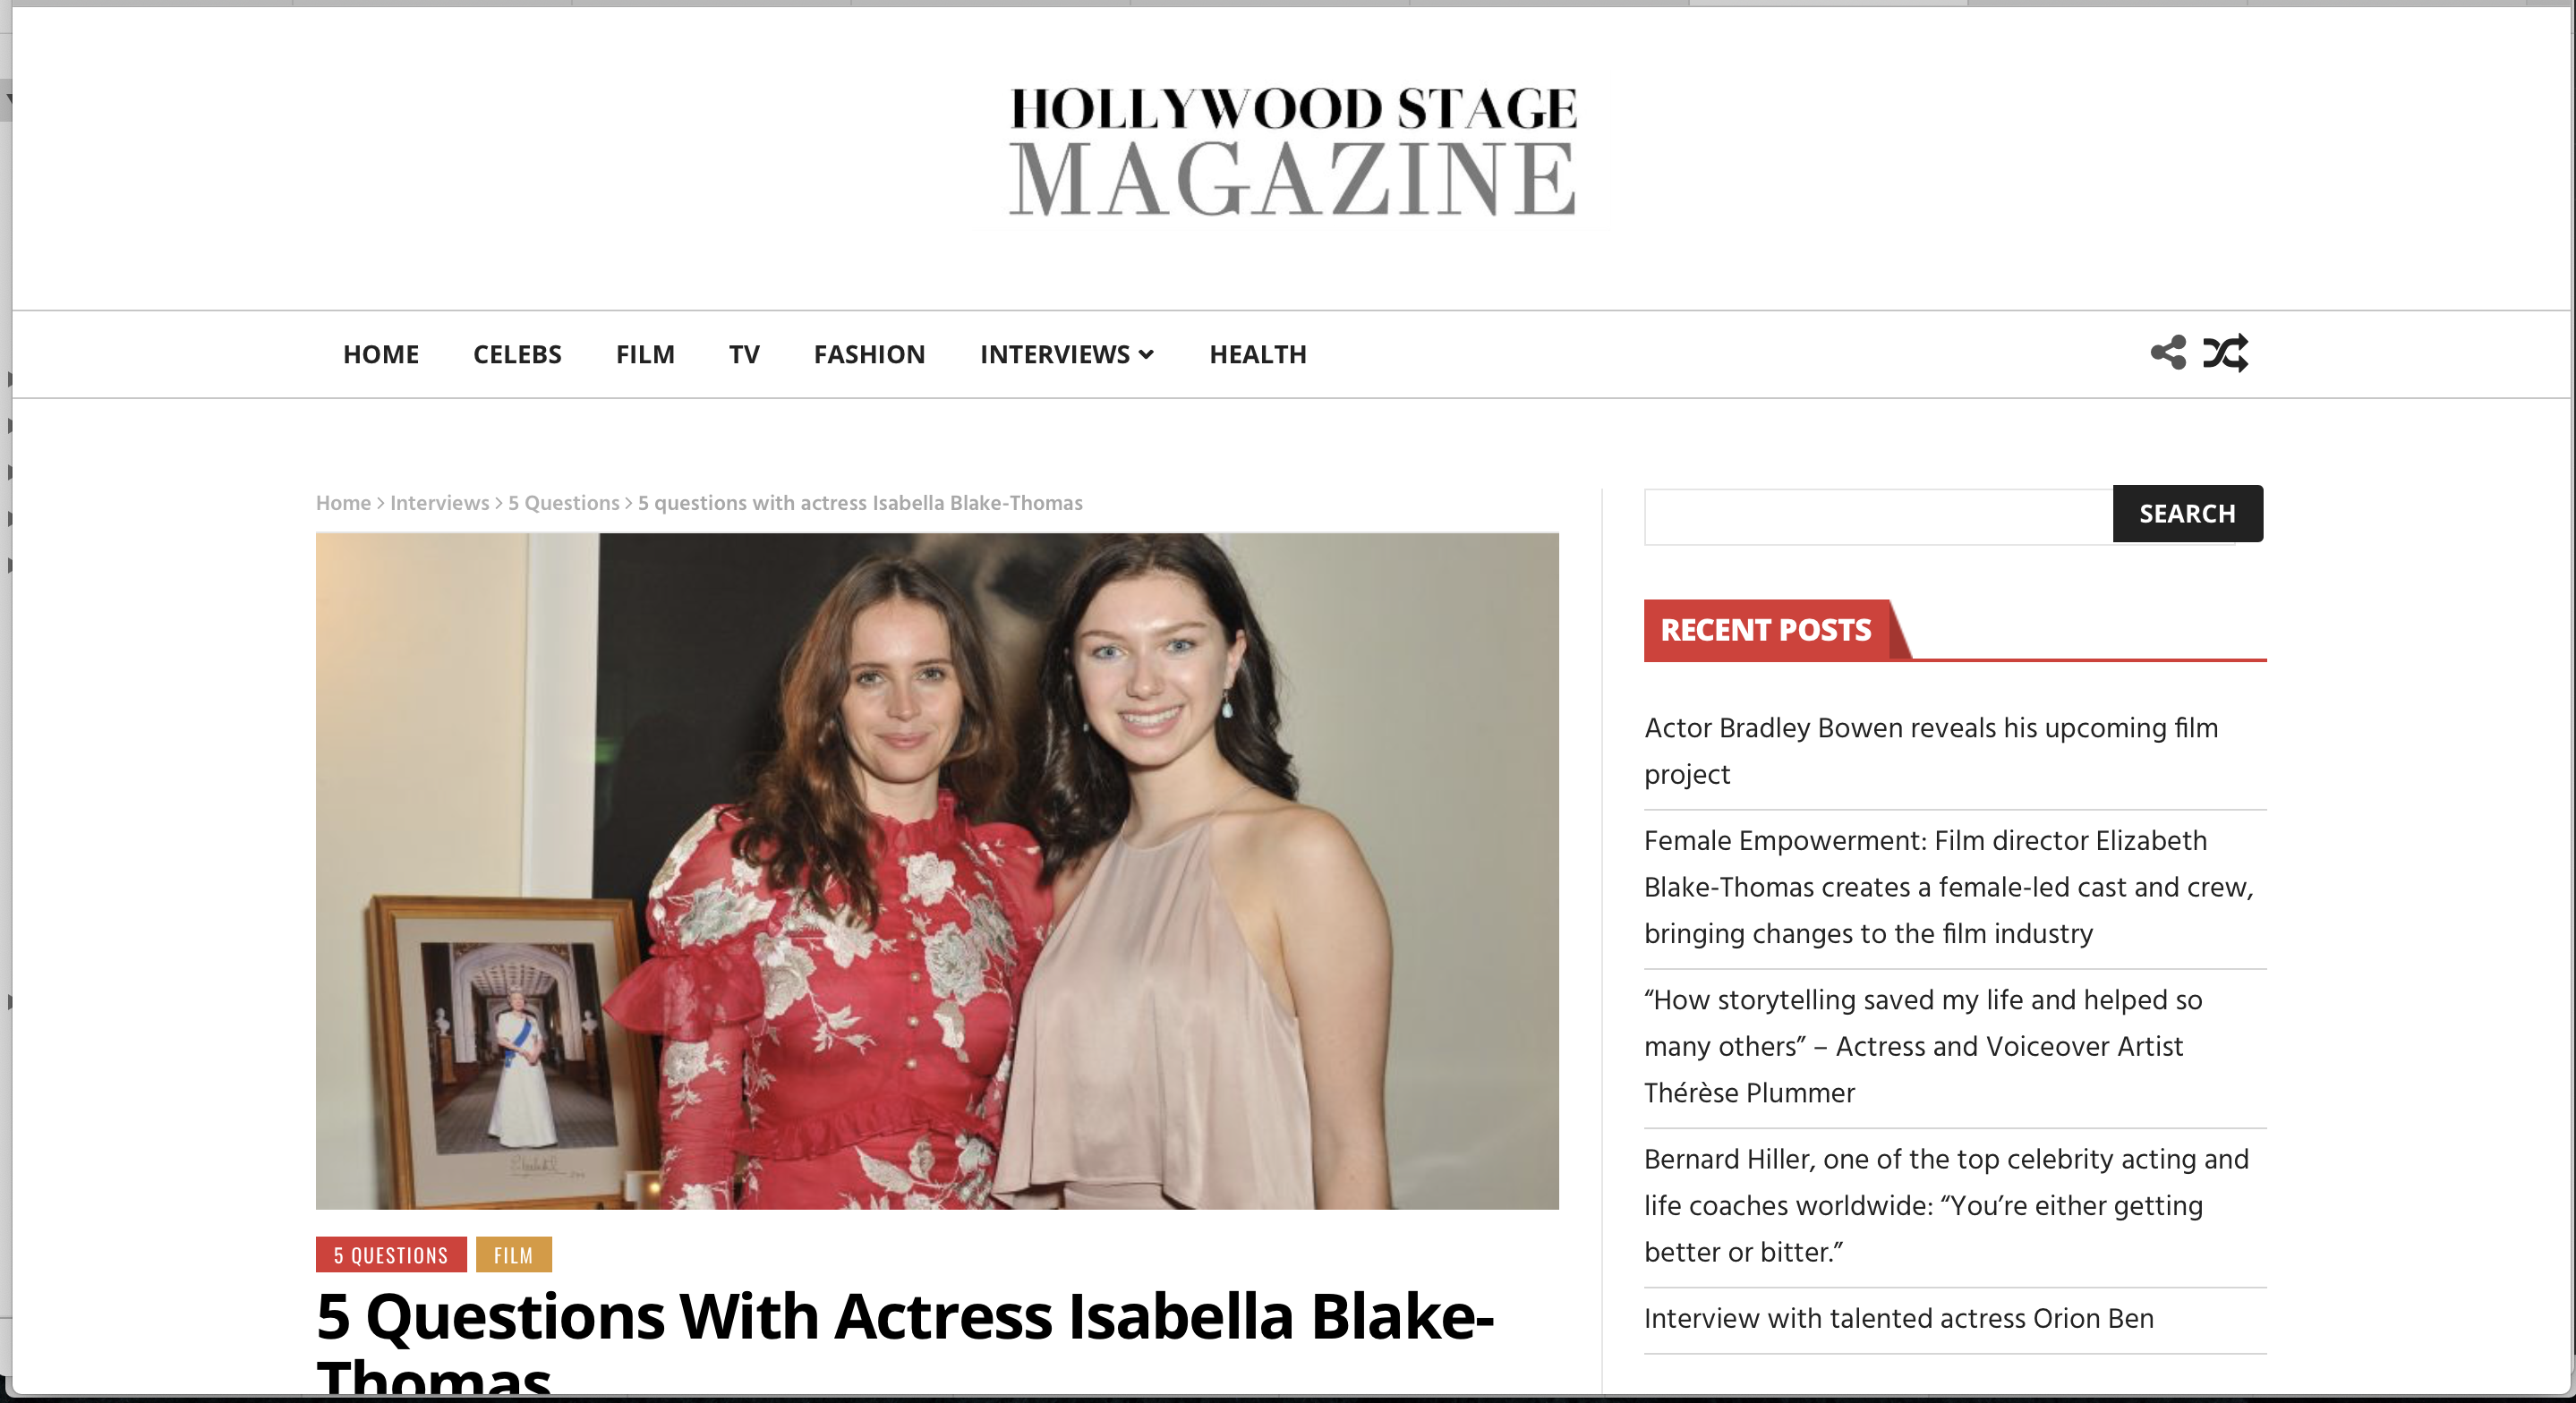 5 Questions With Actress Isabella Blake-Thomas